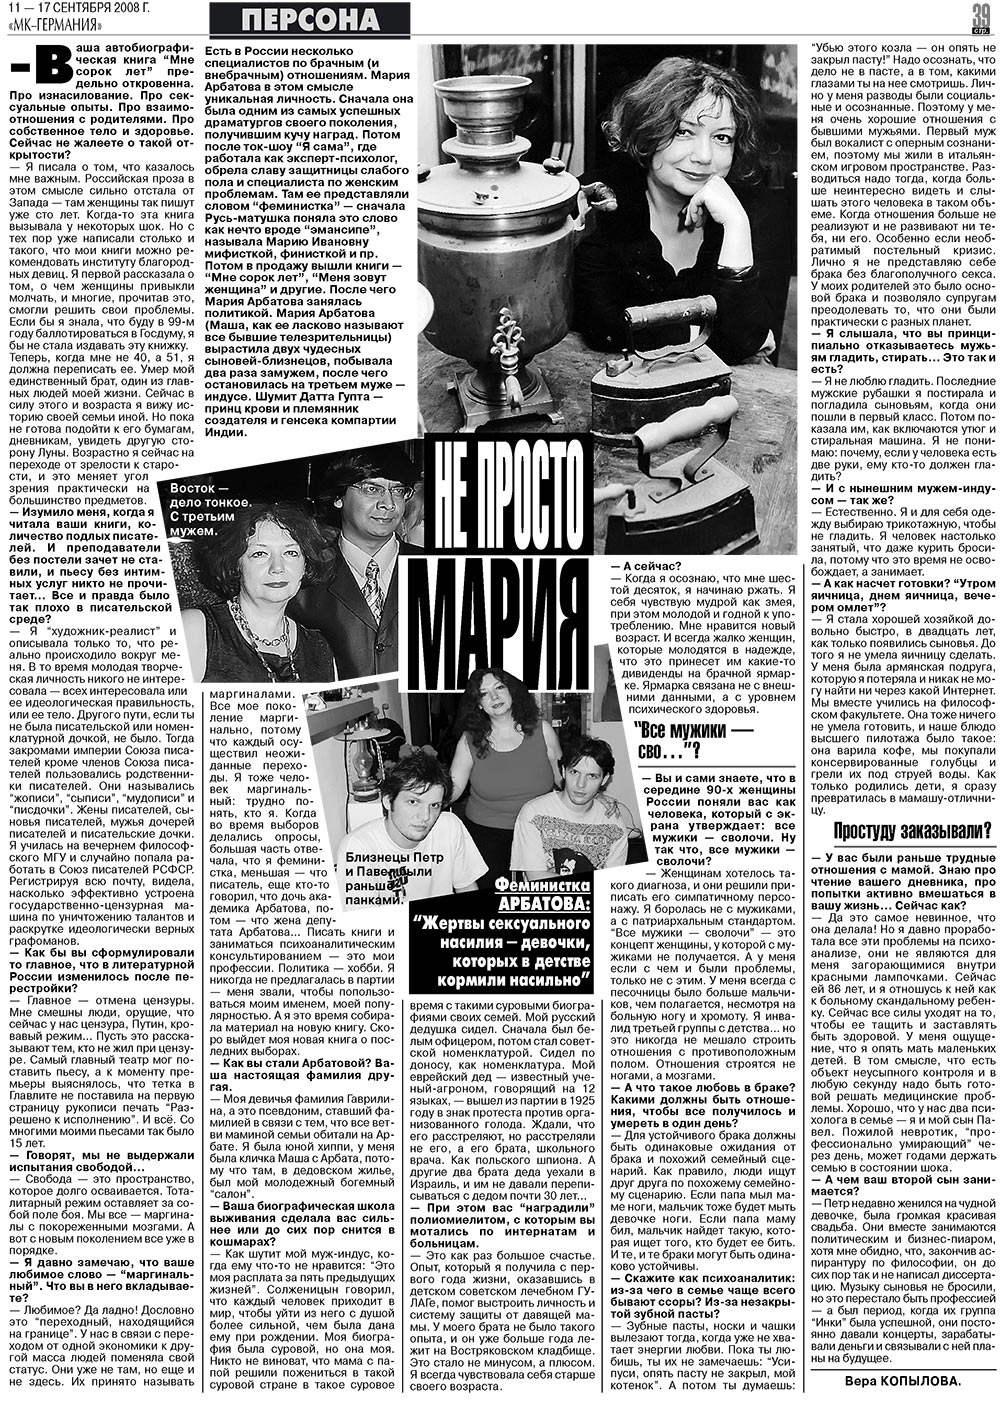 МК-Германия, газета. 2008 №37 стр.39